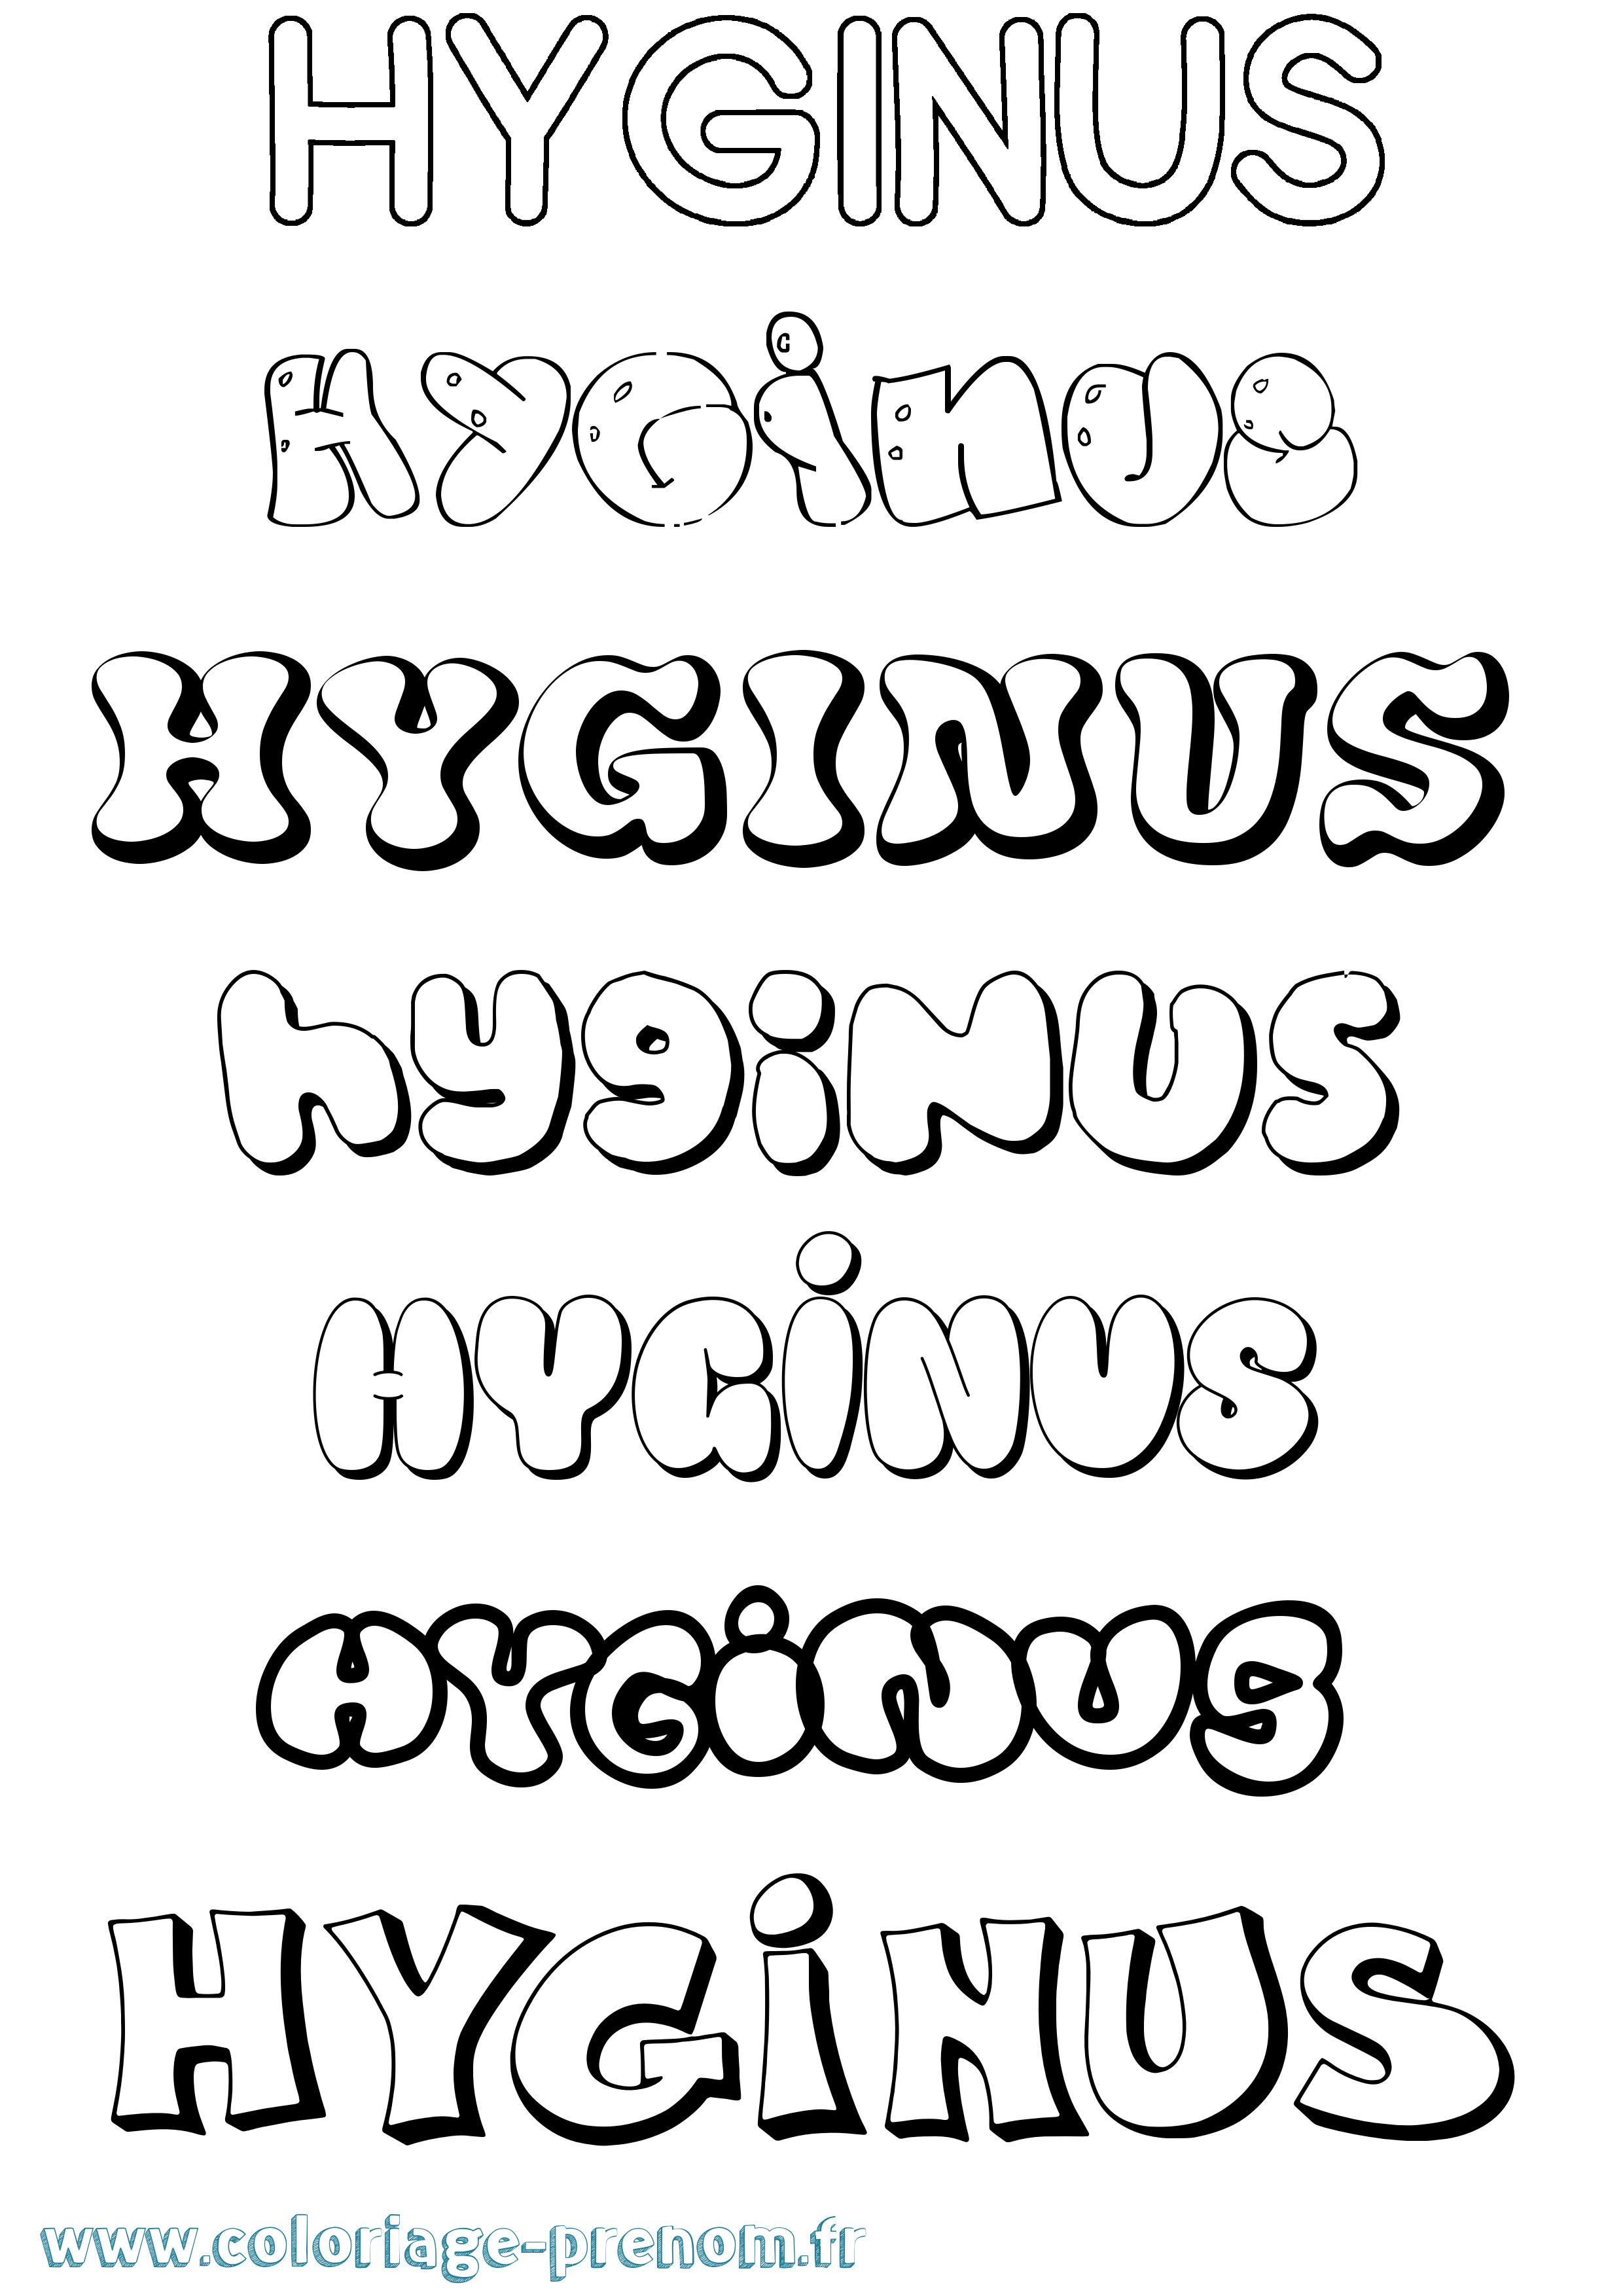 Coloriage prénom Hyginus Bubble